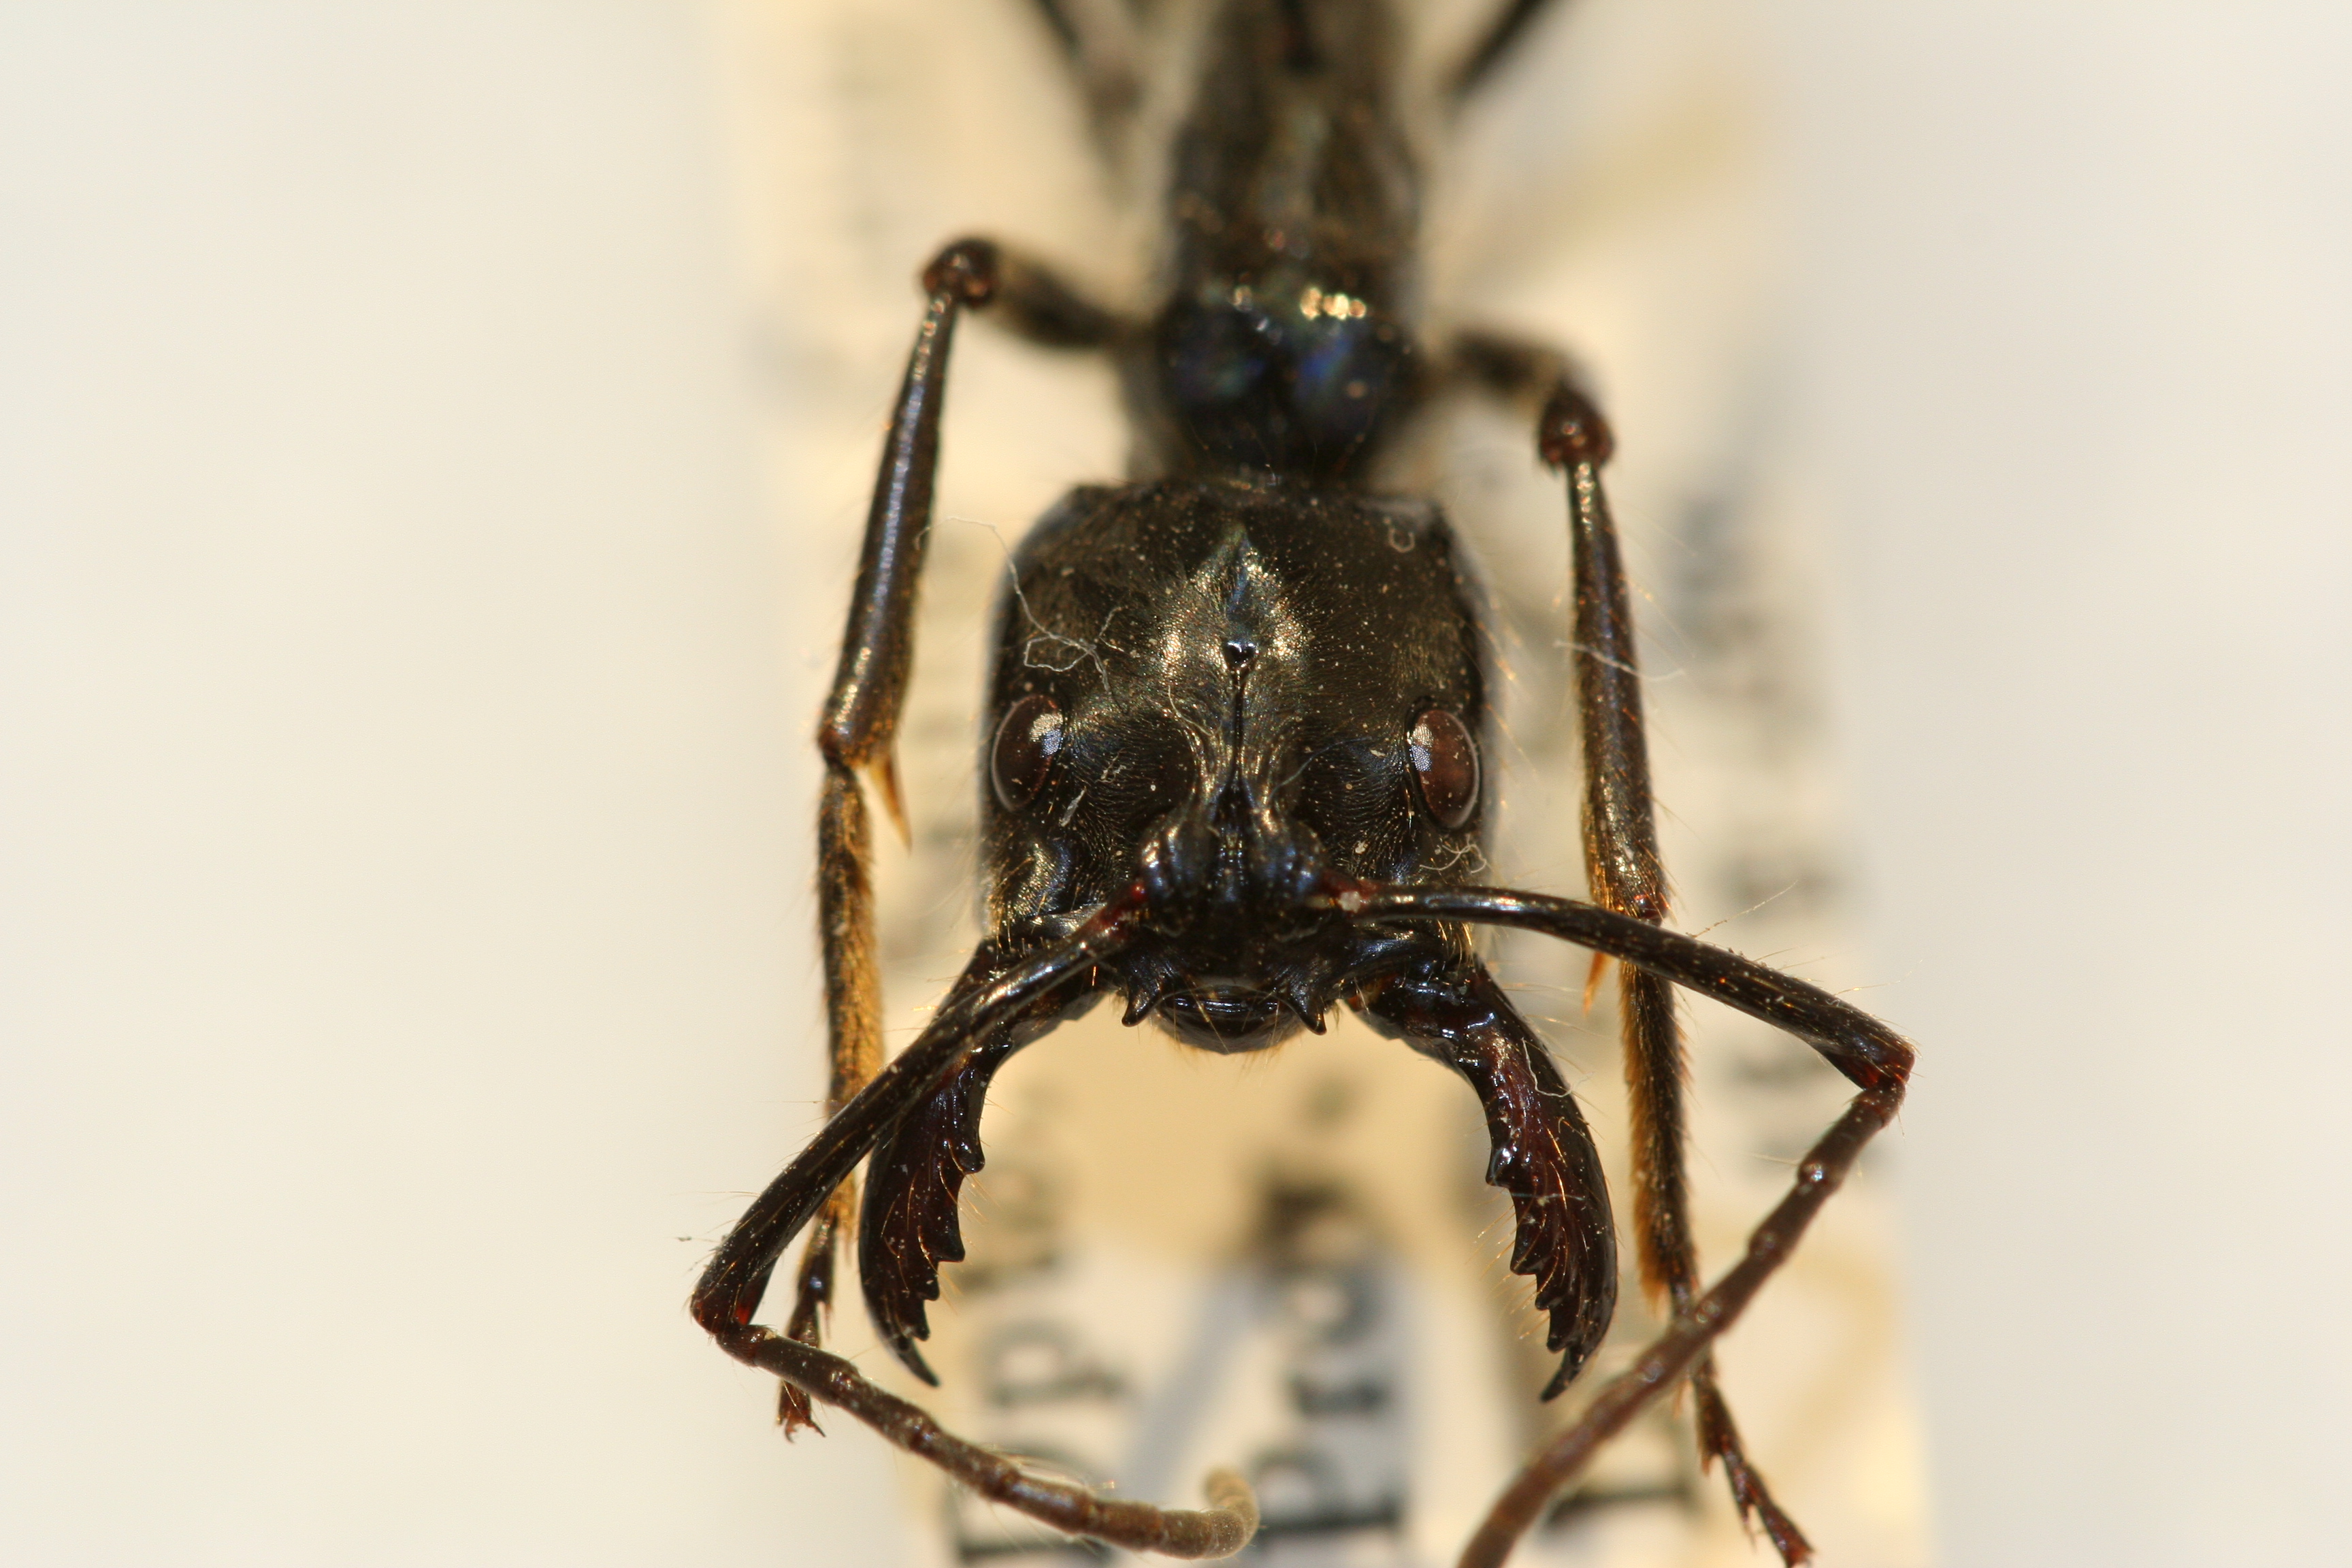 Dinoponera: Giant Killer Ants from the